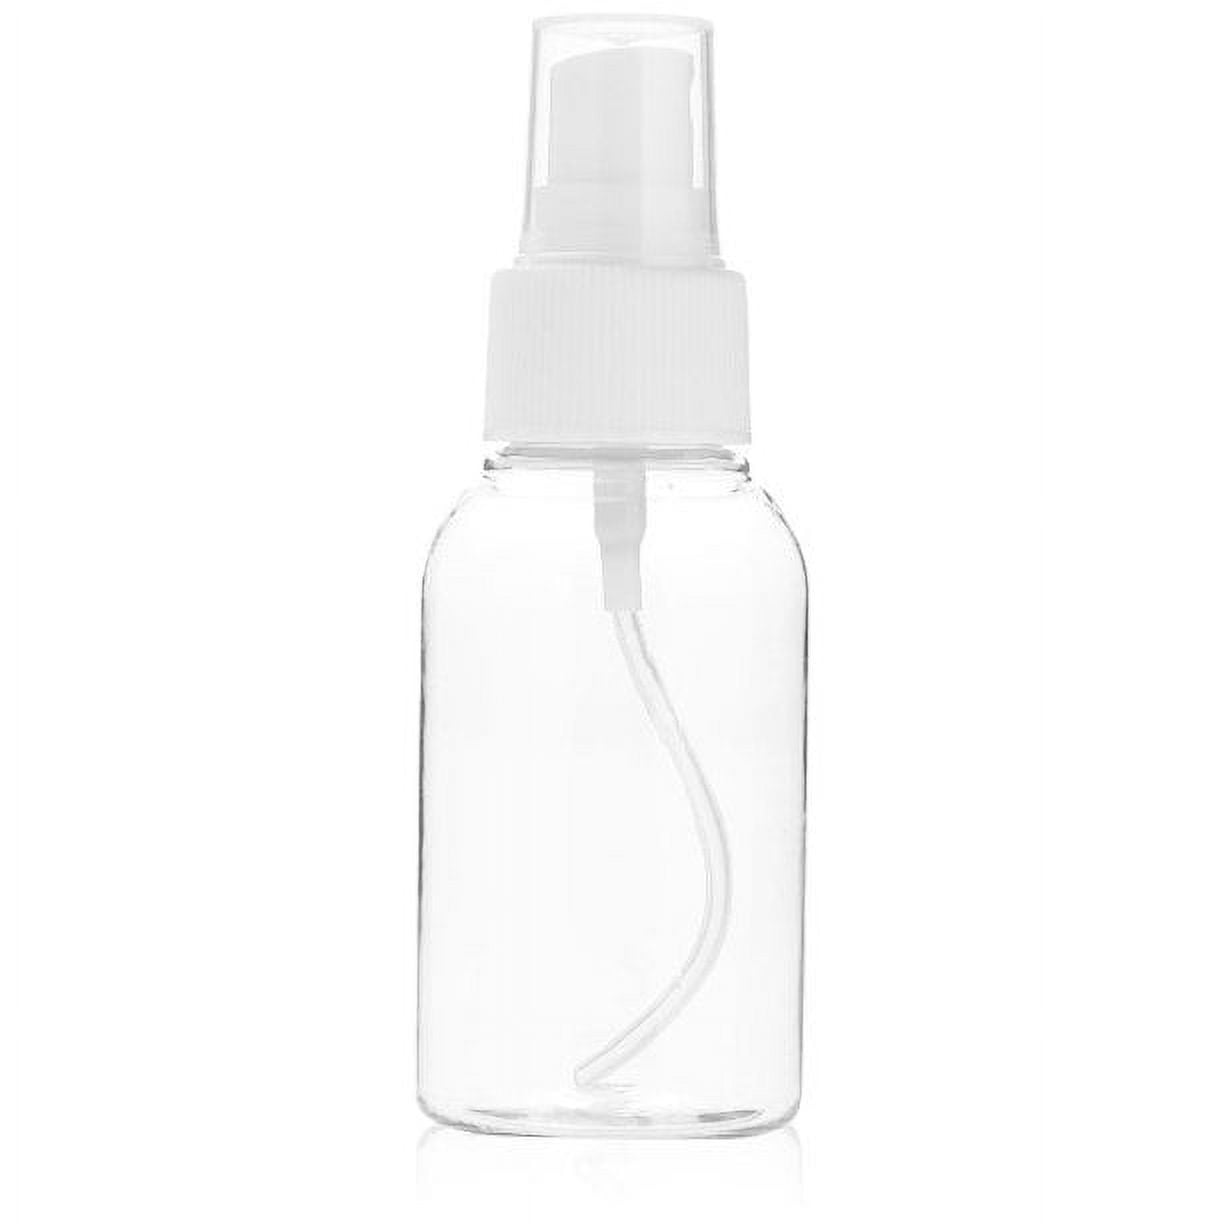 Fantasea Fine Mist Spray Bottle, 2.5 Ounce 